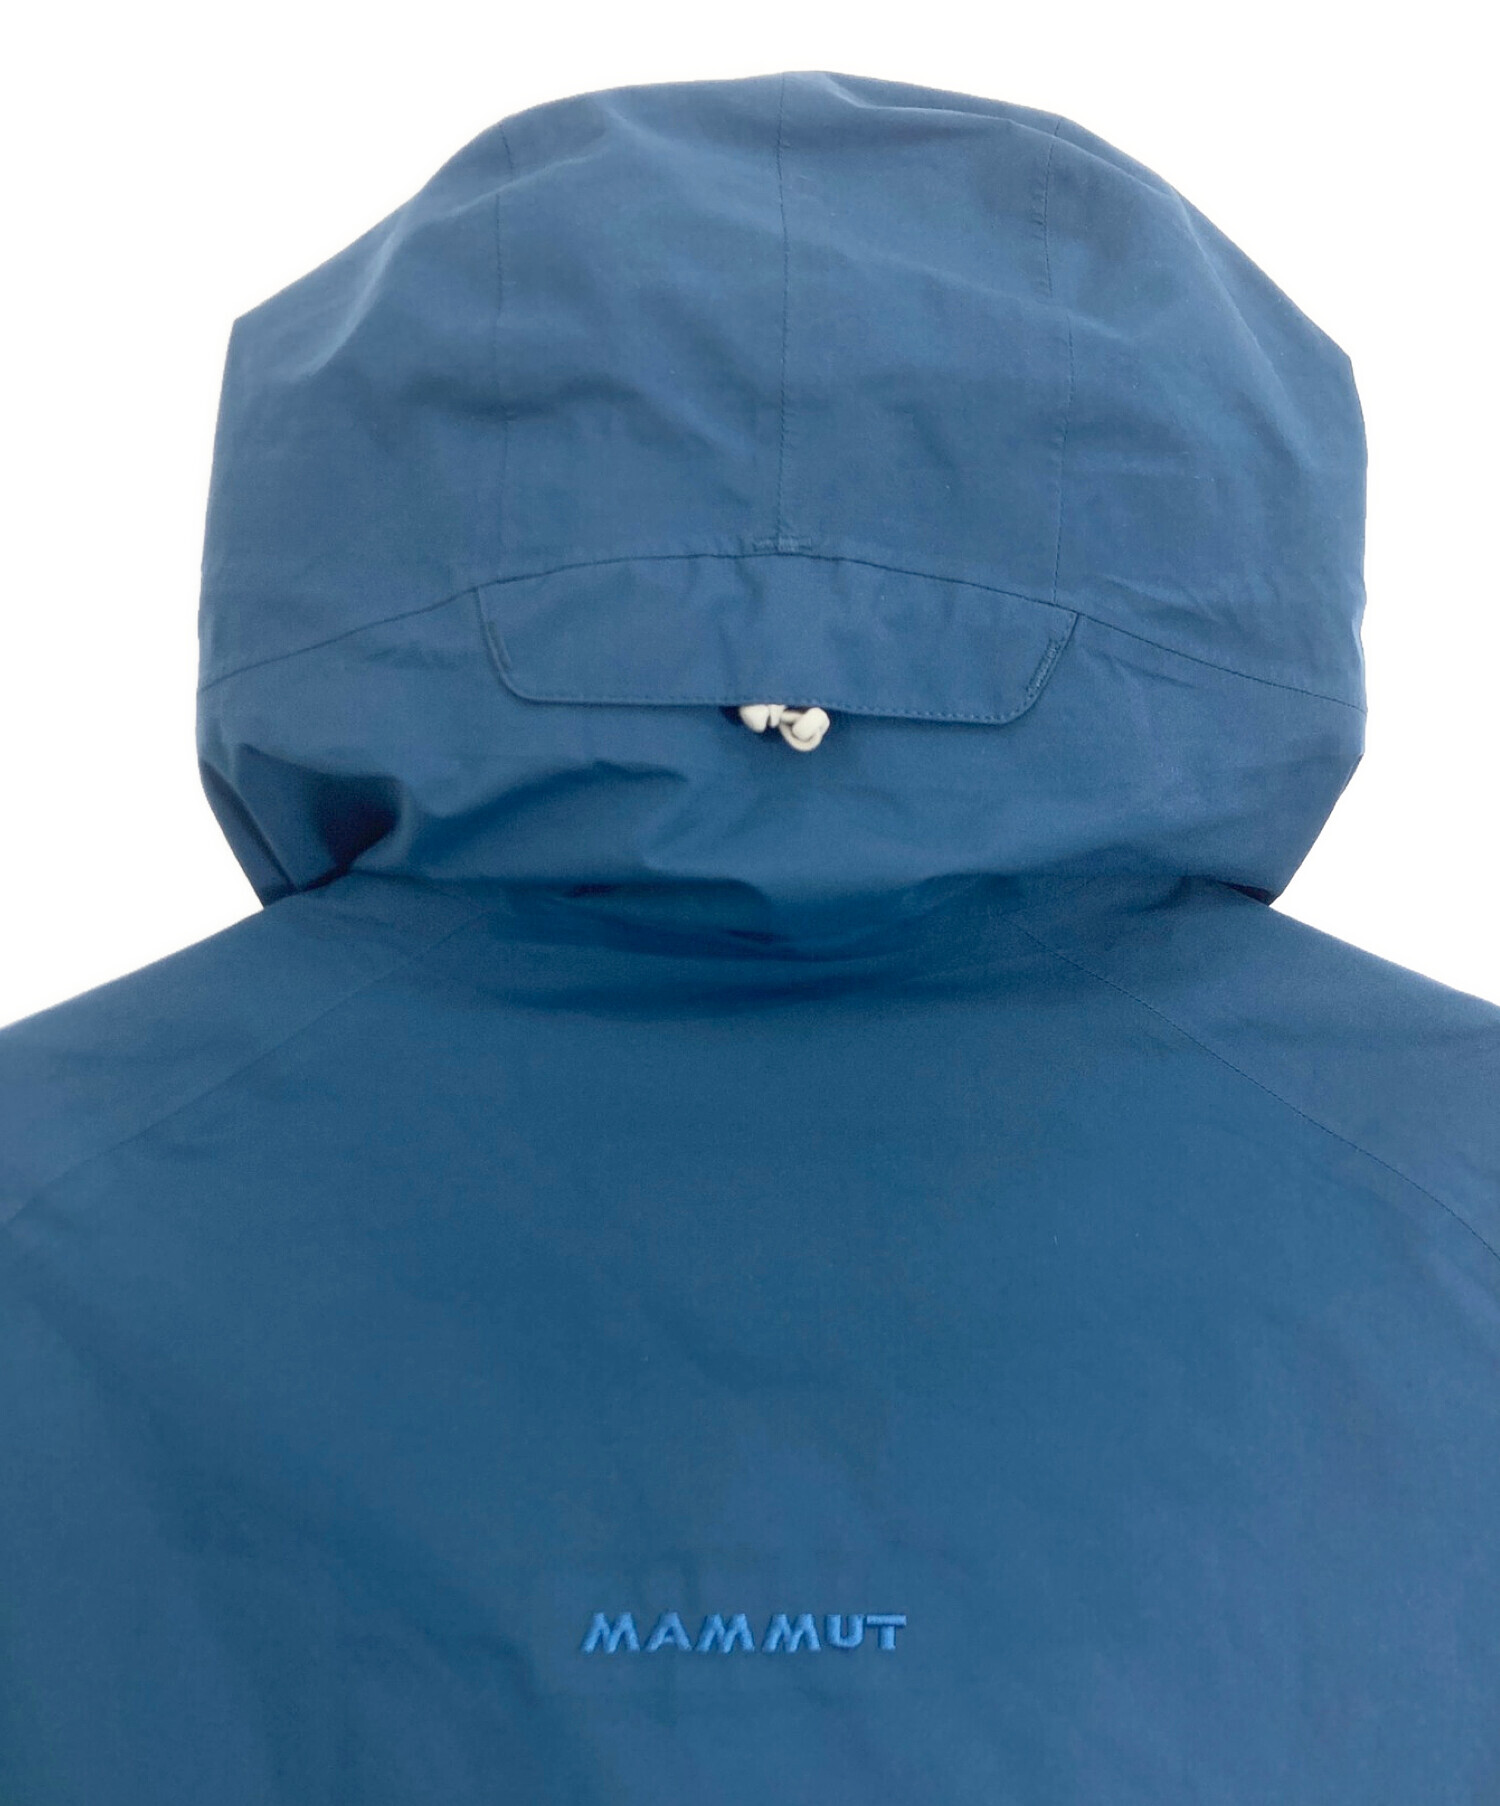 MAMMUT (マムート) GORE-TEX ALL WEATHER Jacket ネイビー サイズ:S